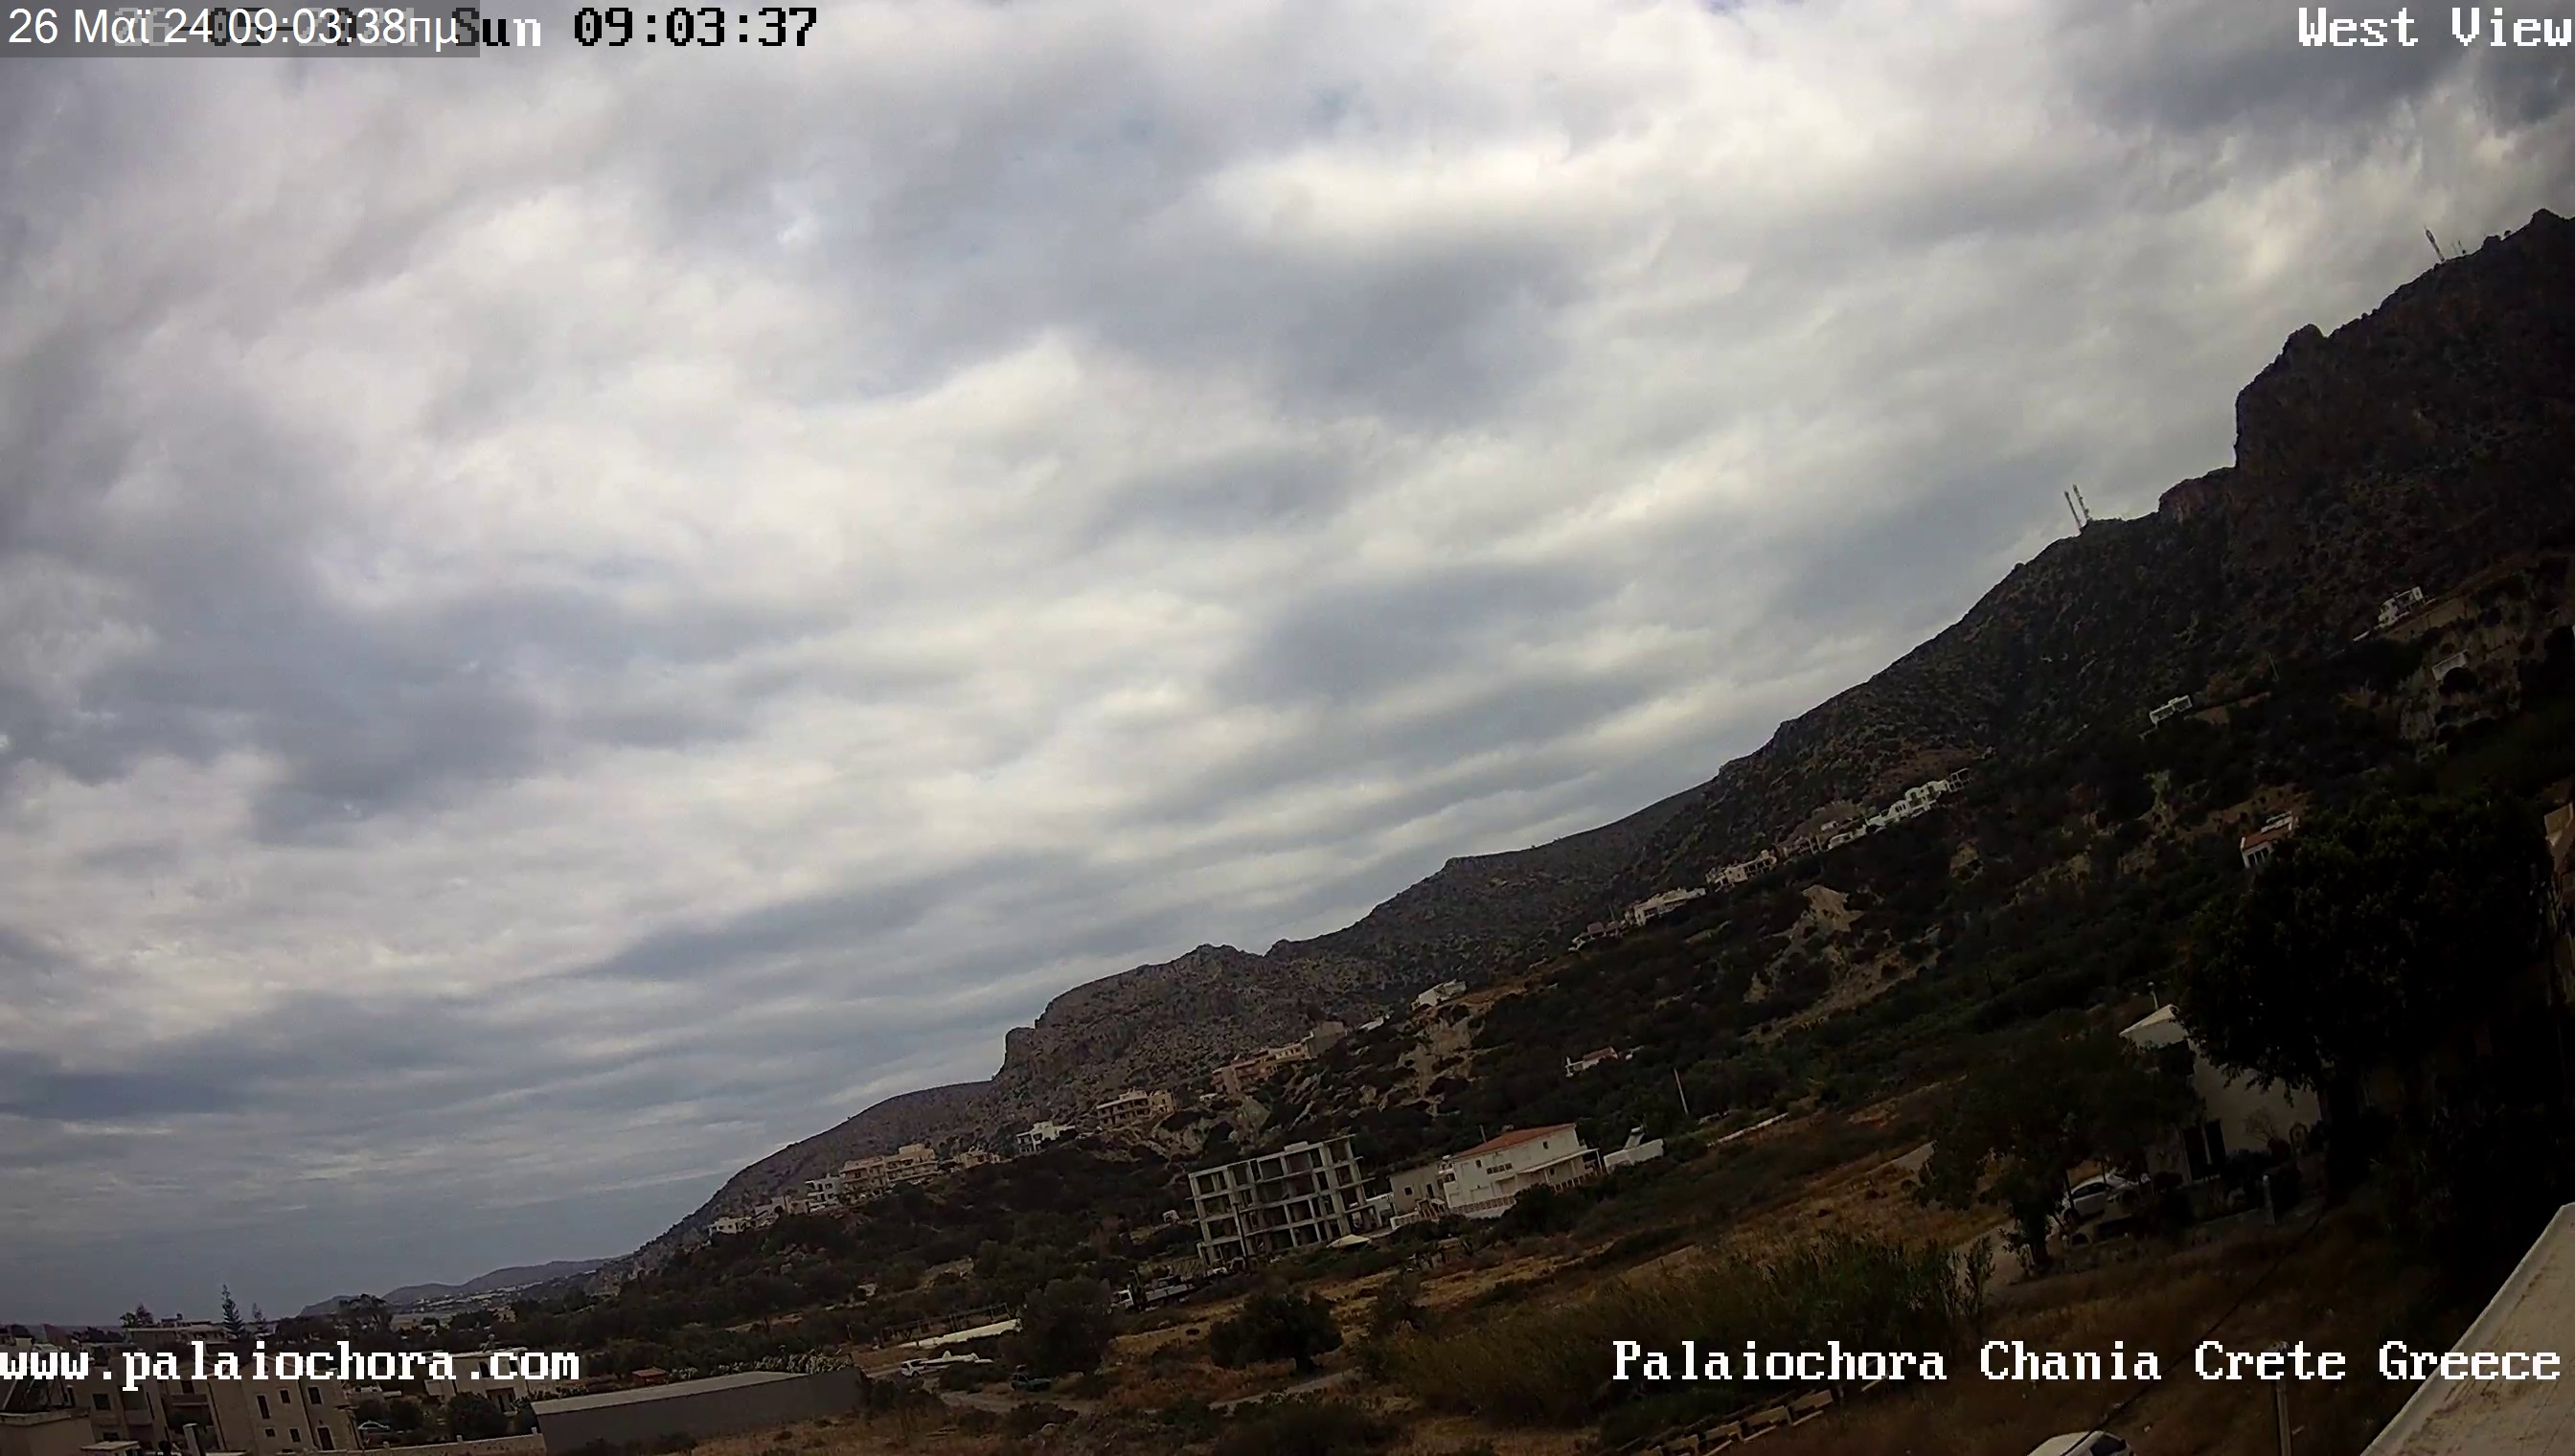 Paleochora (Crète) Ve. 09:08